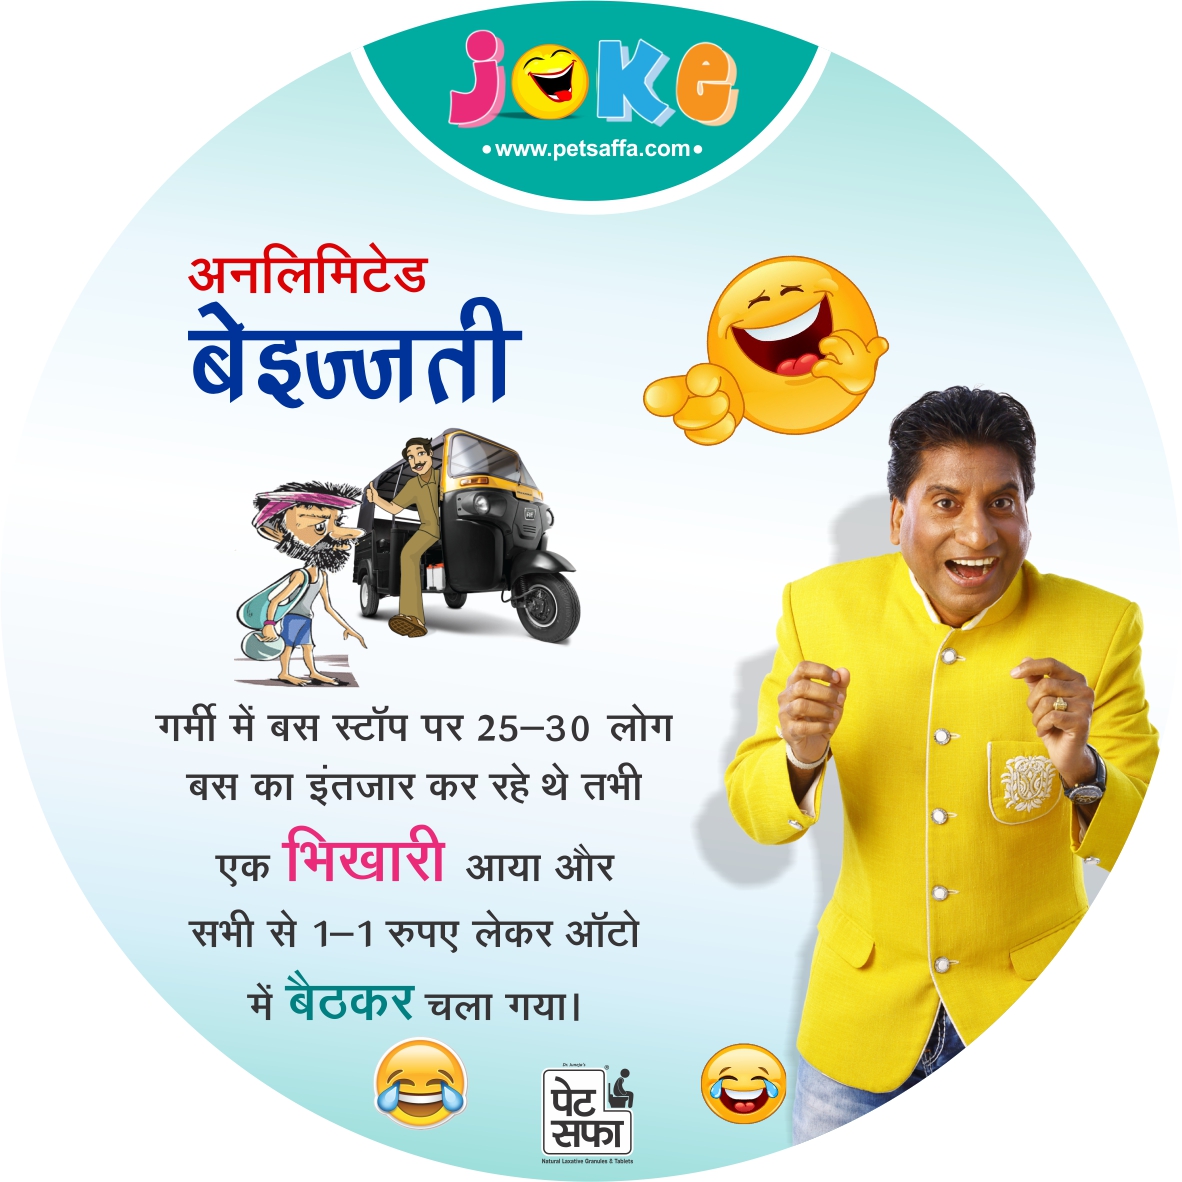 Ladies Shopkeeper-Hari Mirch-Joke in Hindi 